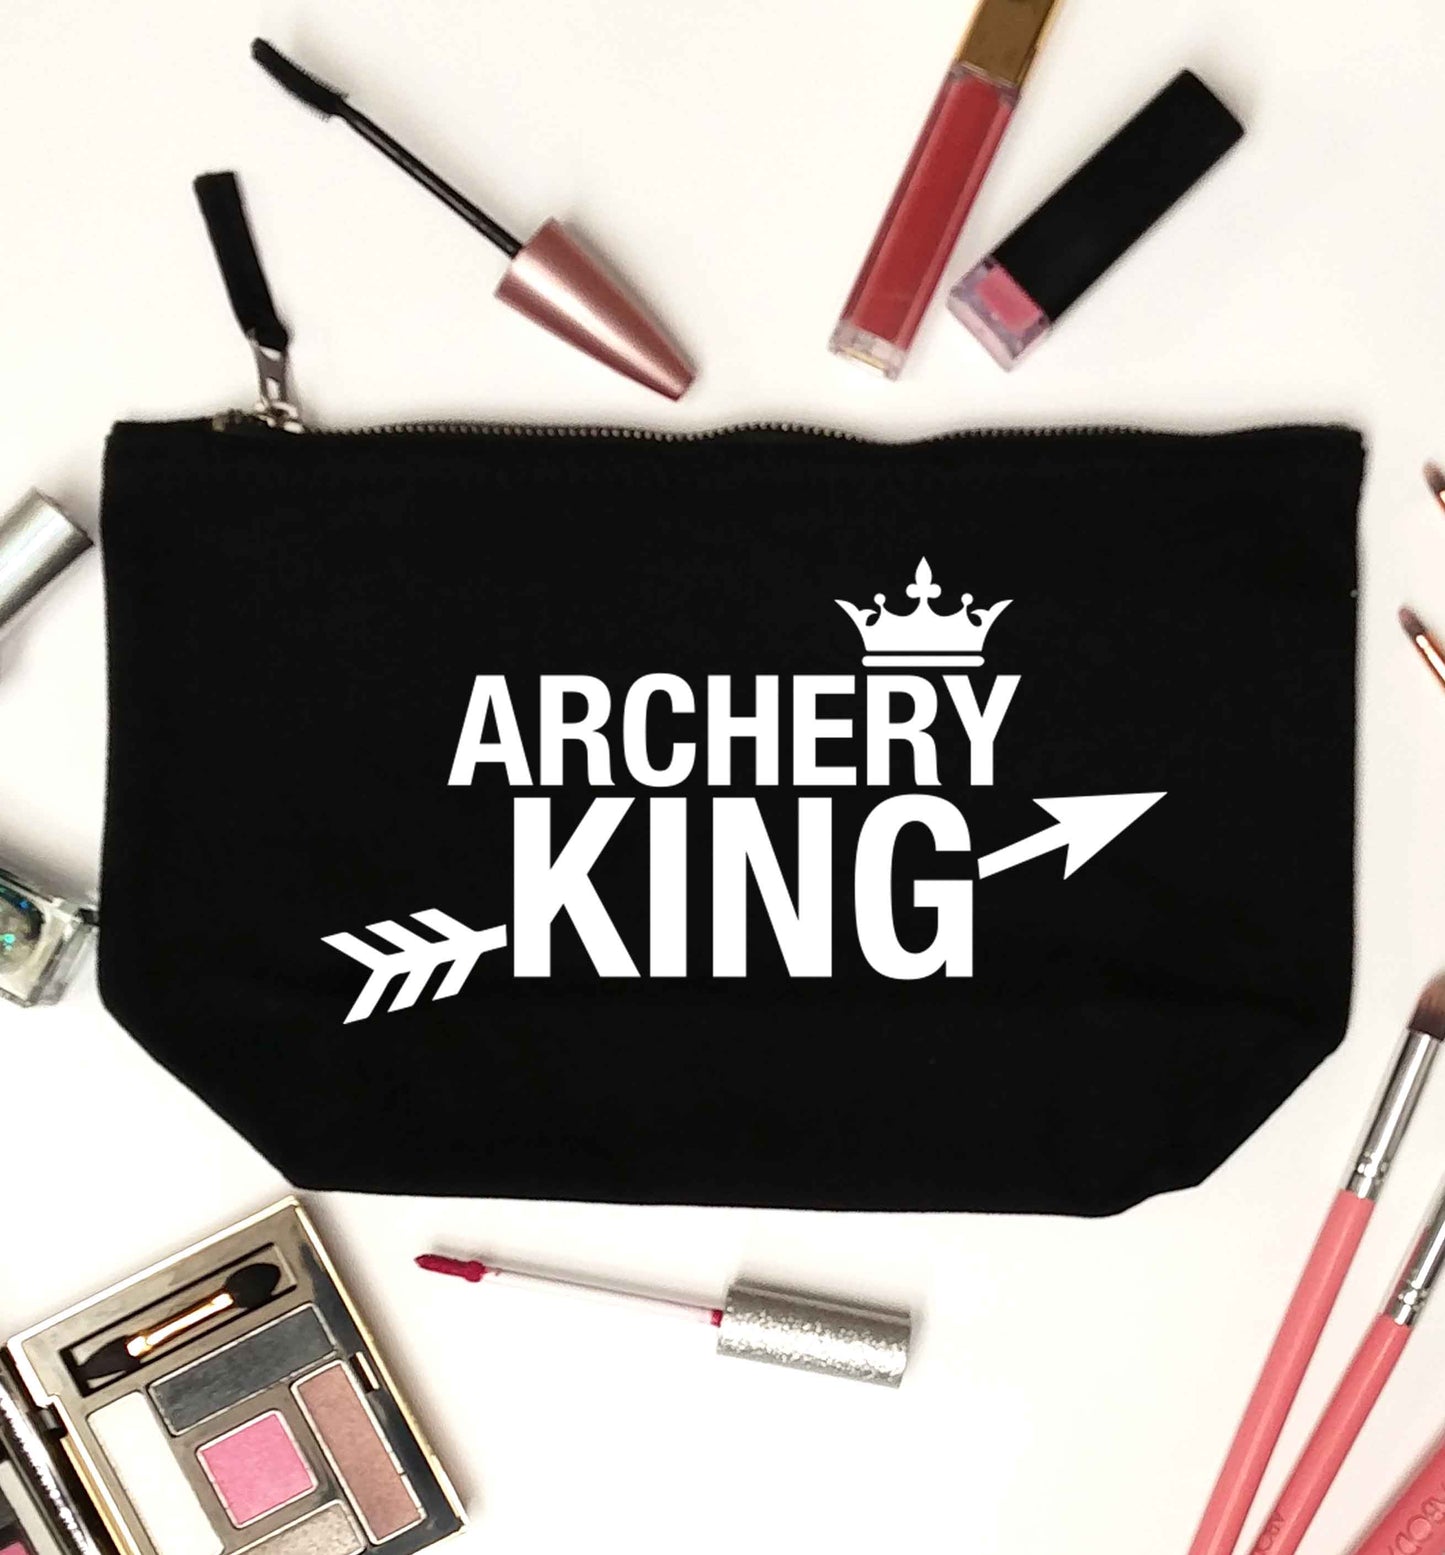 Archery king black makeup bag